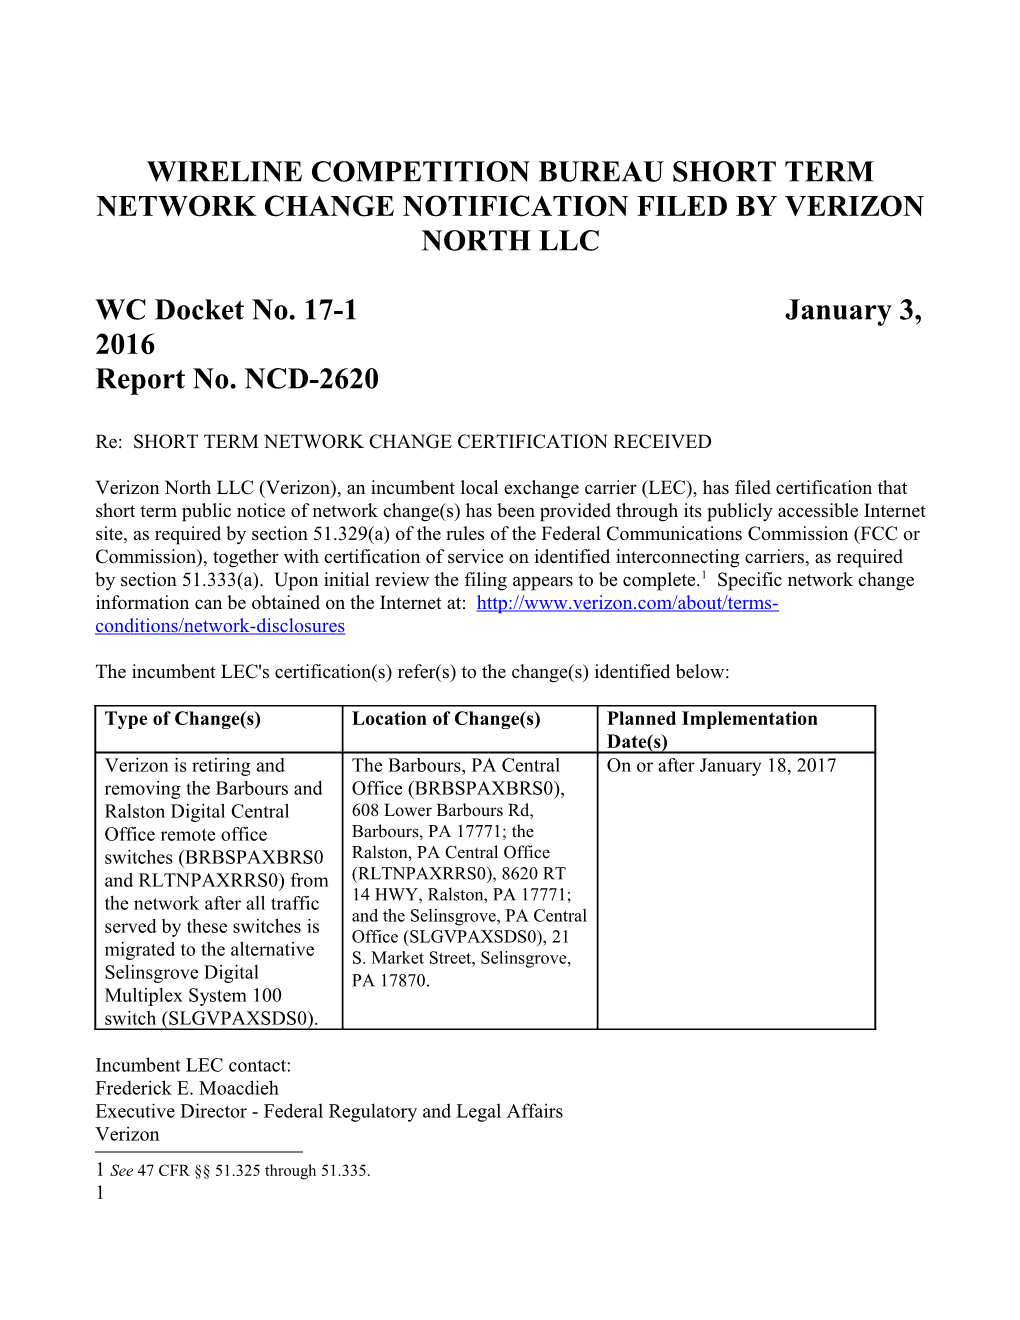 Wireline Competition Bureaushort Termnetwork Change Notificationfiled by Verizon North Llc